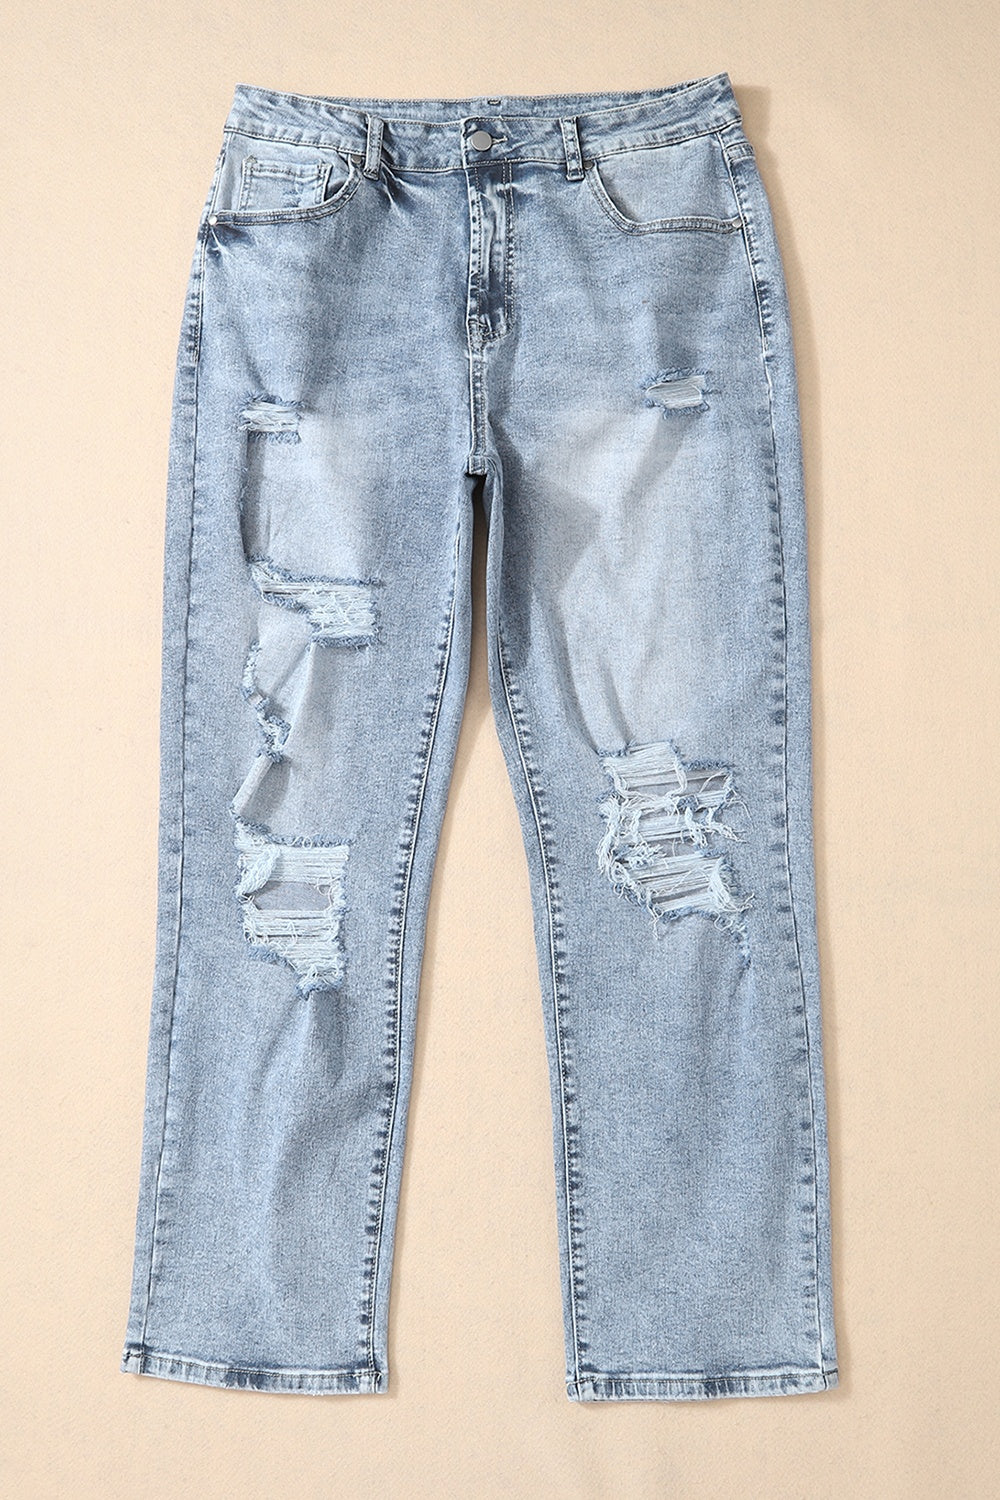 Distressed High Waist Jeans Pants